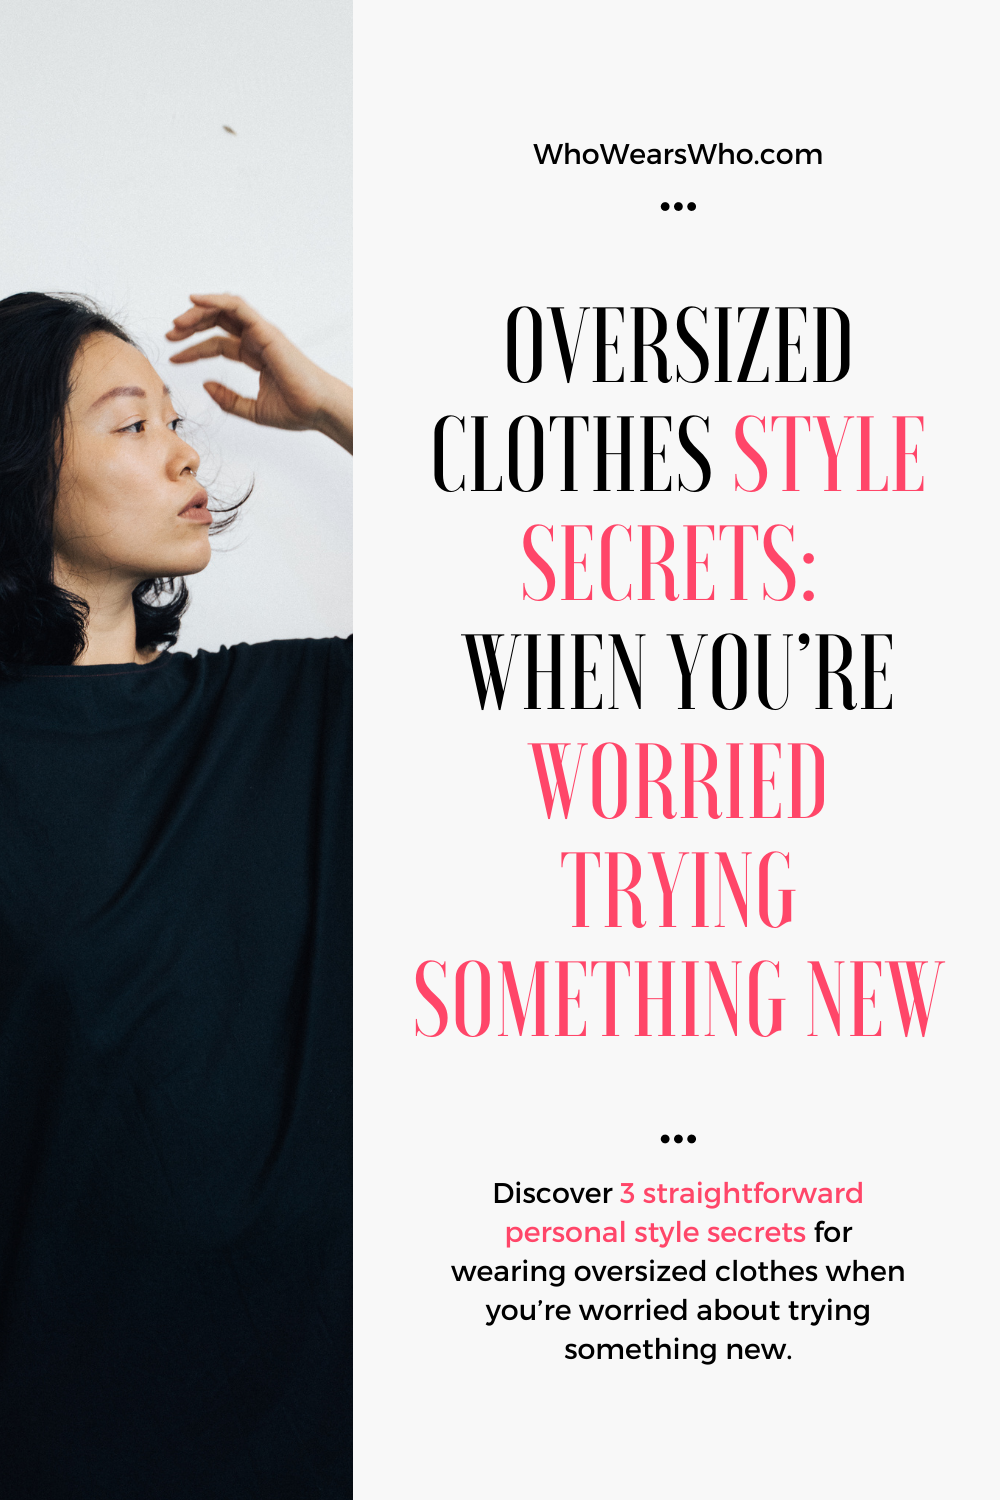 Oversized clothes style secrets